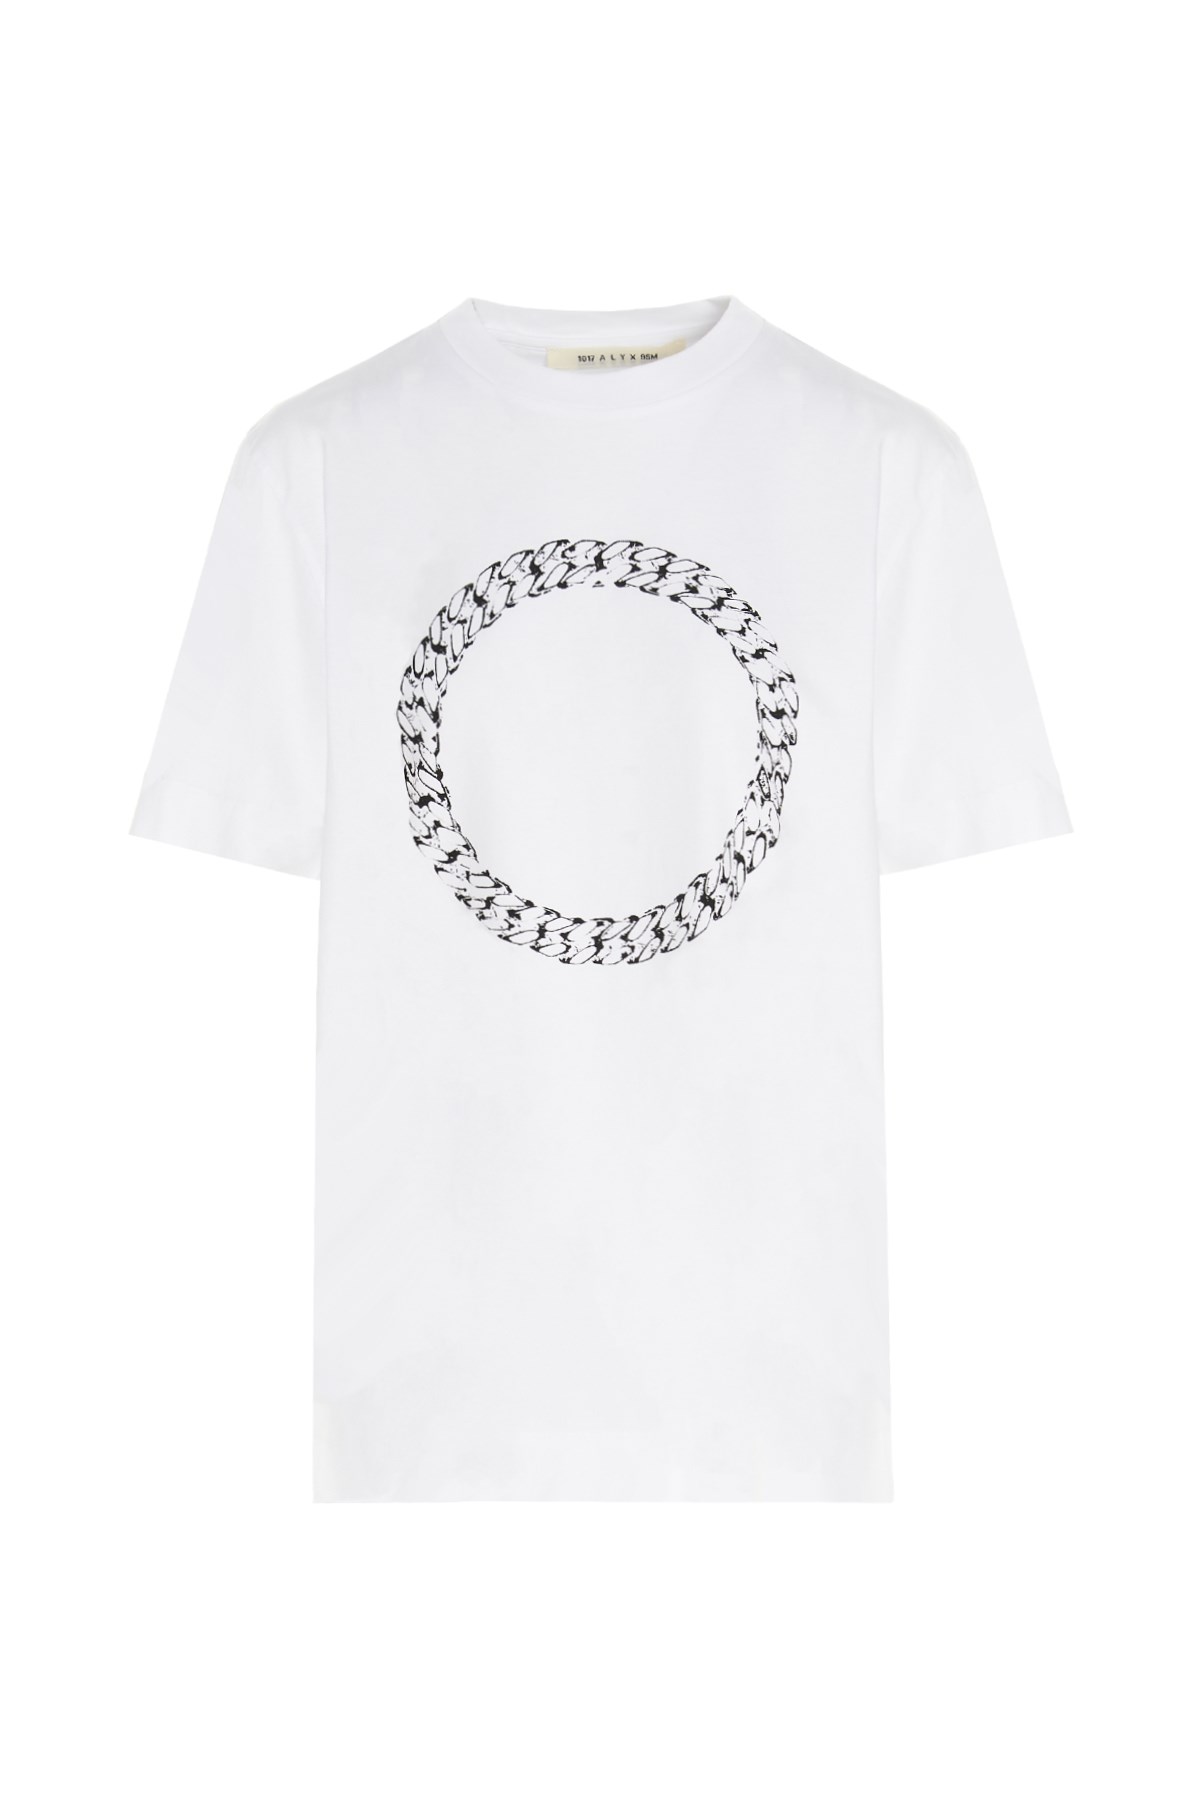 1017-ALYX-9SM 'Cube Chain’ T-Shirt